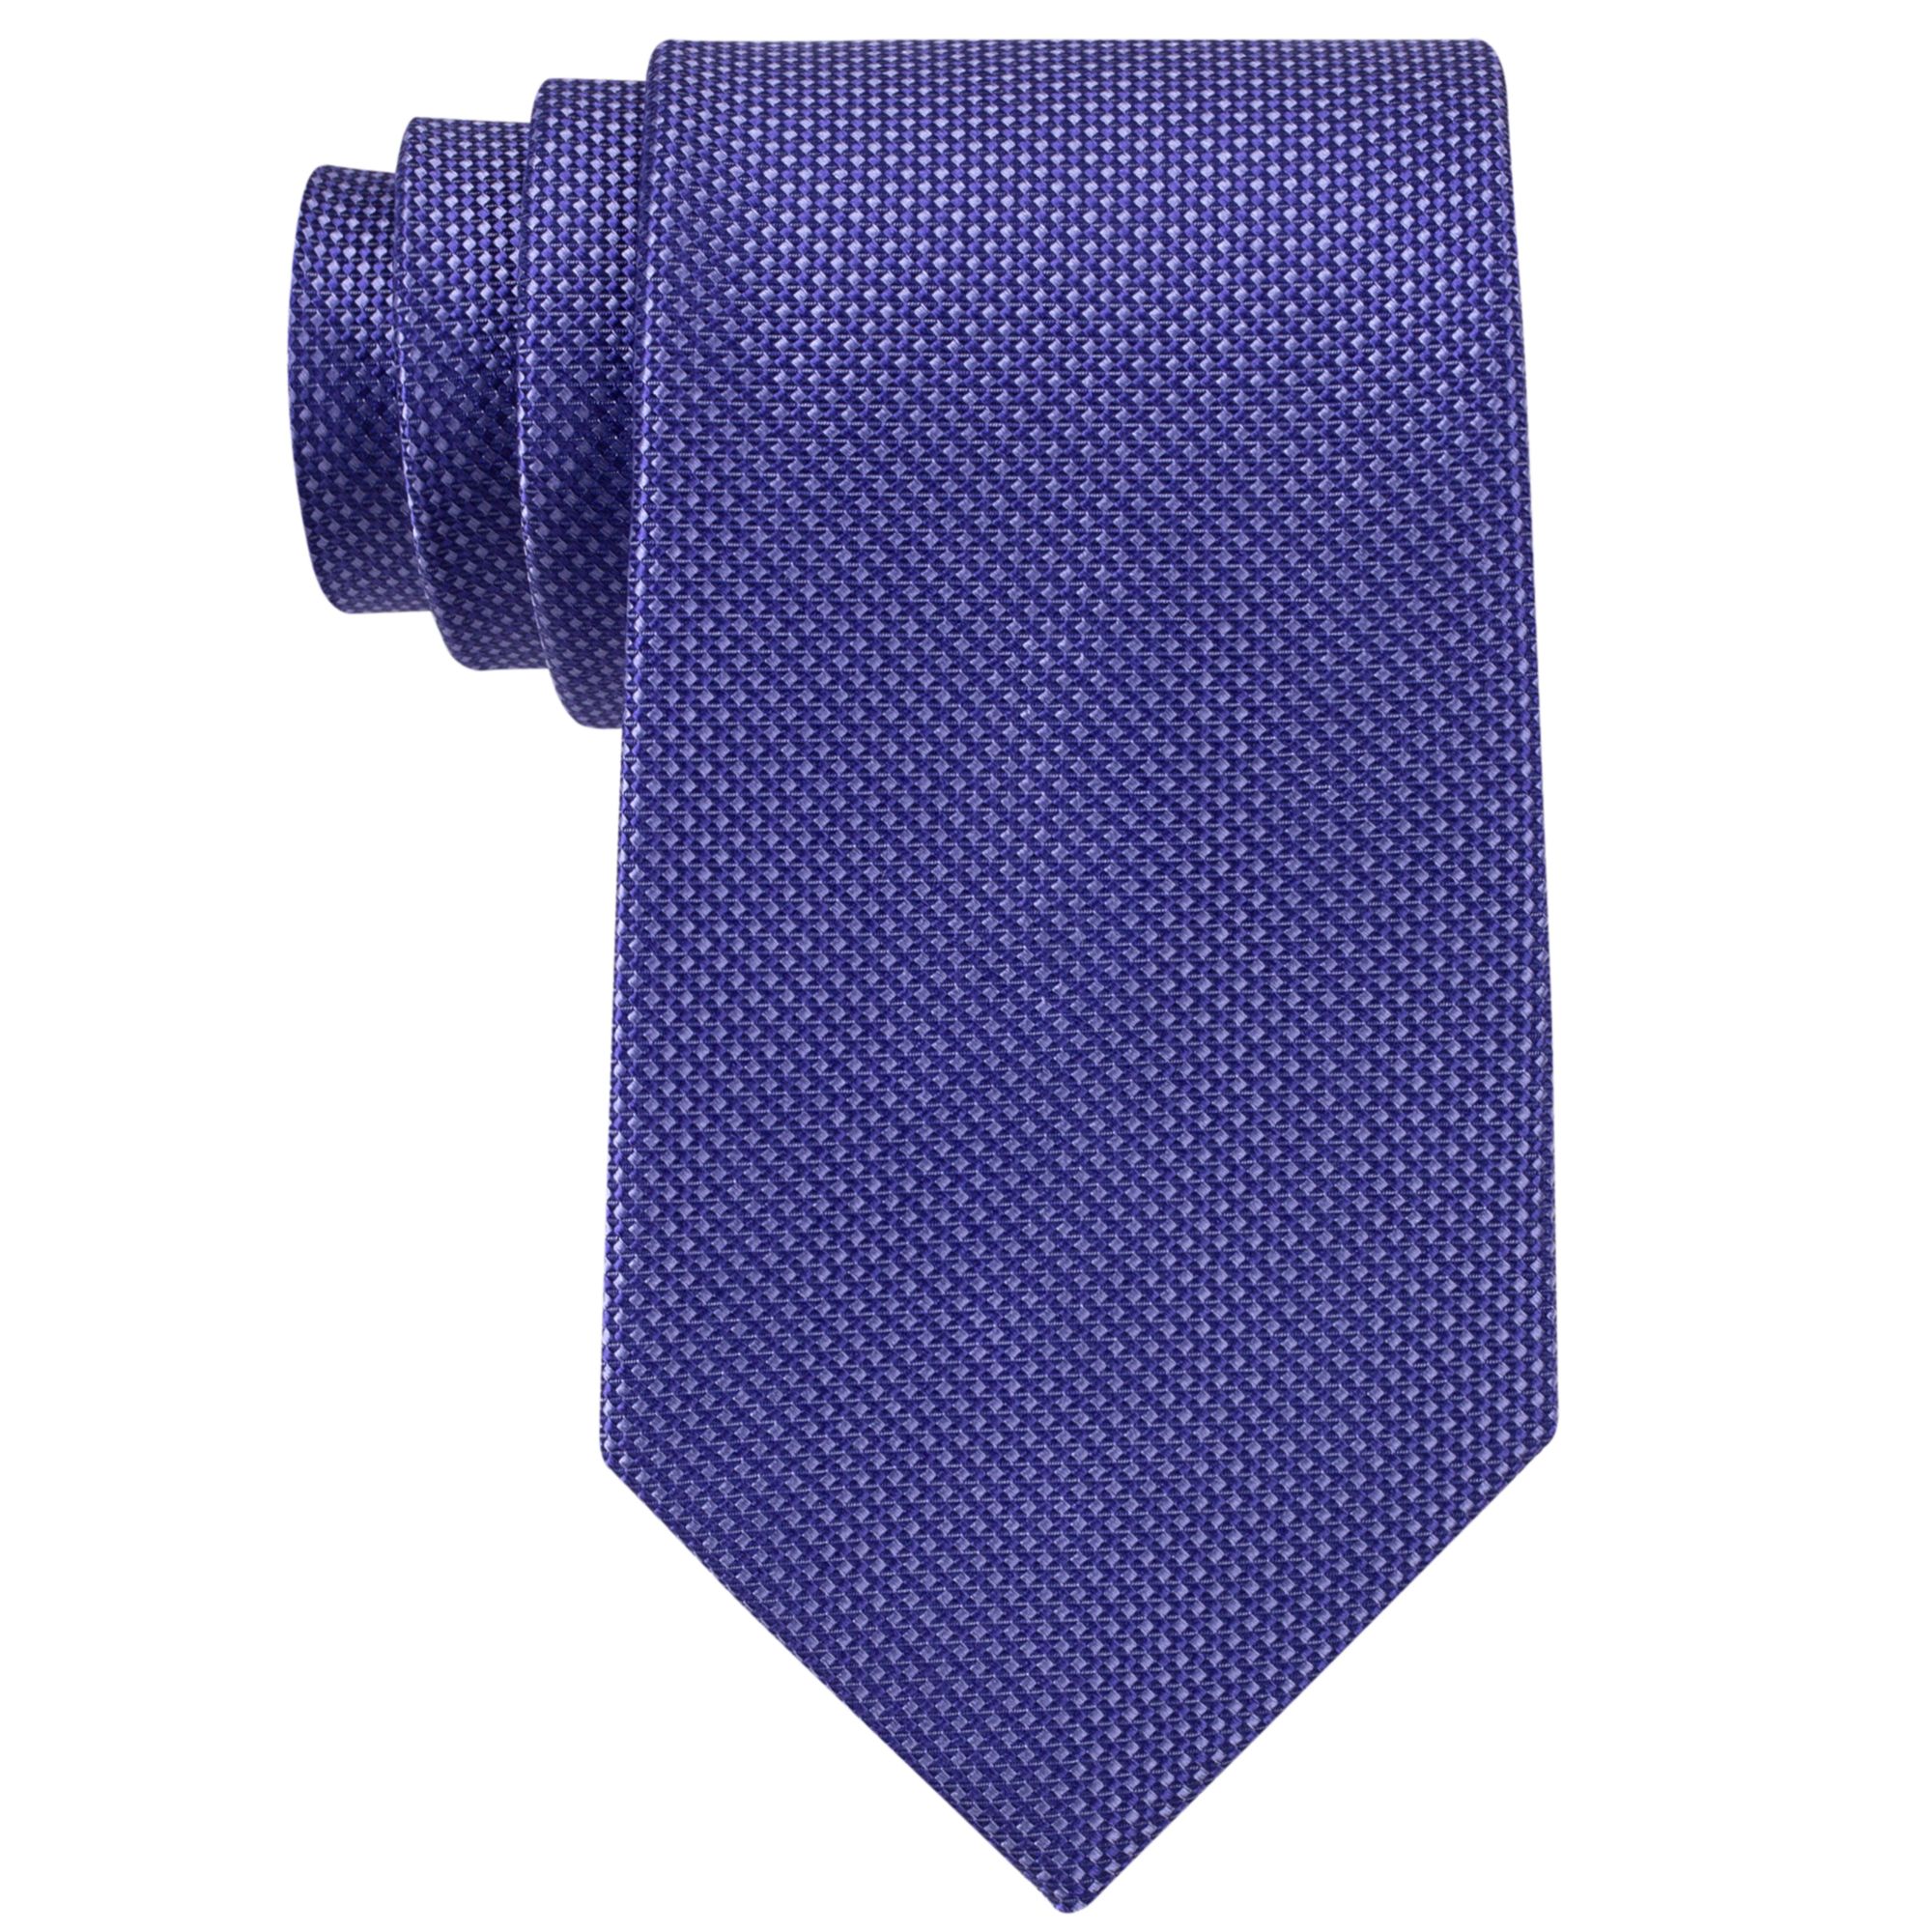 Lyst - Michael Kors Tie, Sorento Solid in Blue for Men